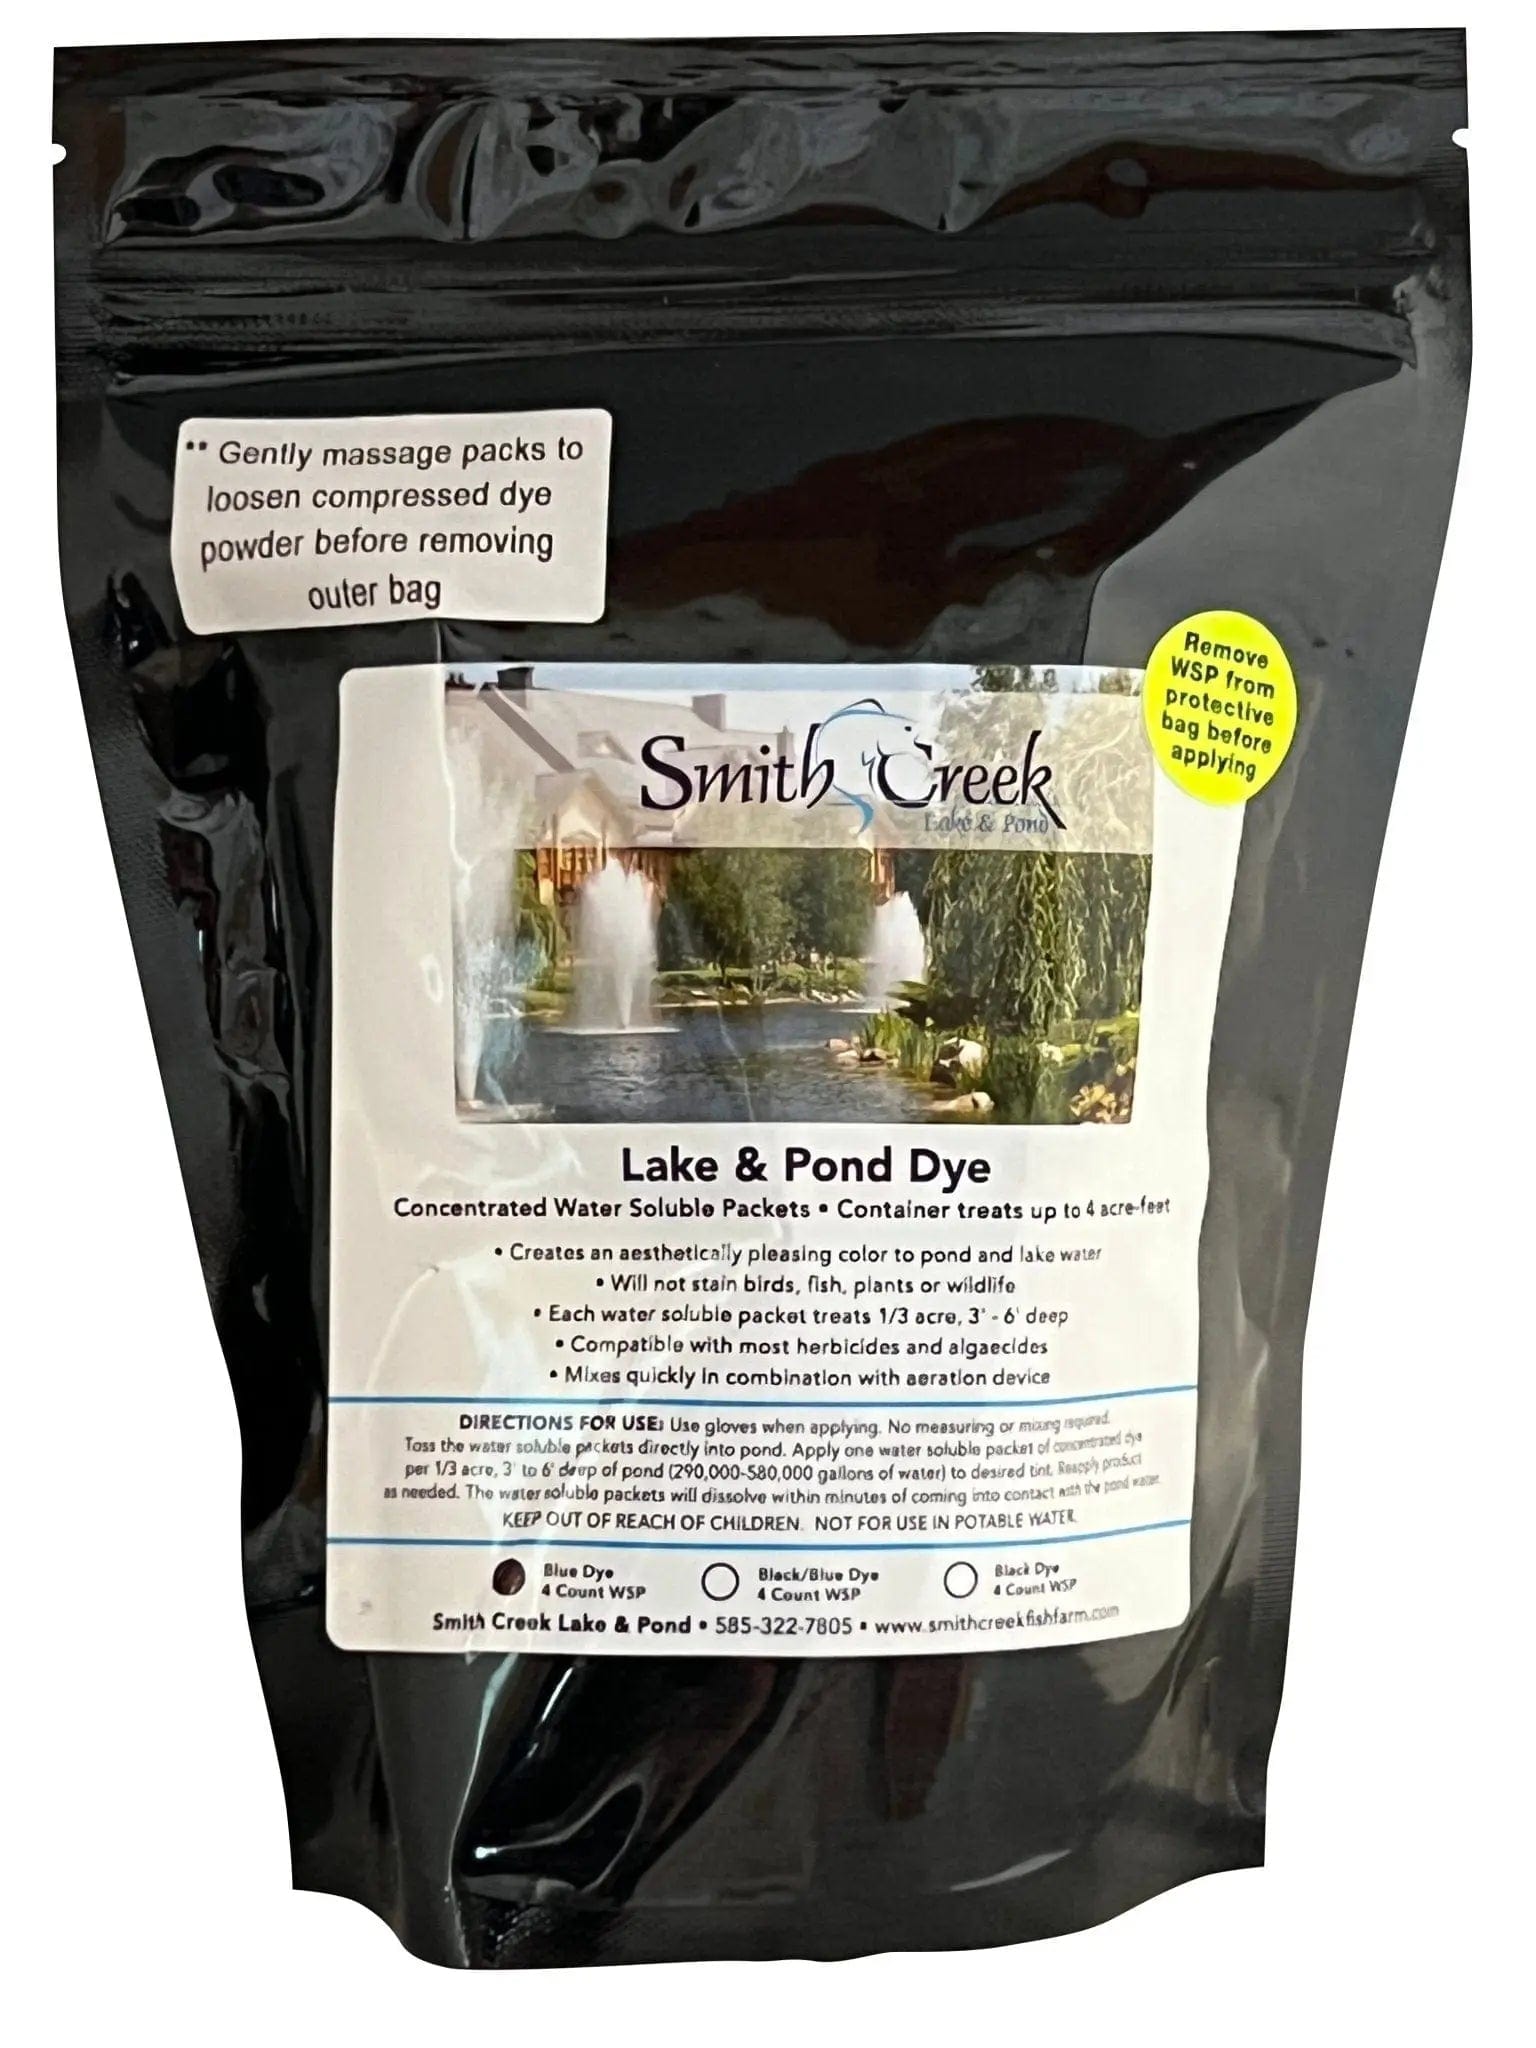 Smith Creek Lake & Pond Pond Dye Blue Pond Dye Toss Packs Enhance Your Pond with Blue Pond Dye Packs